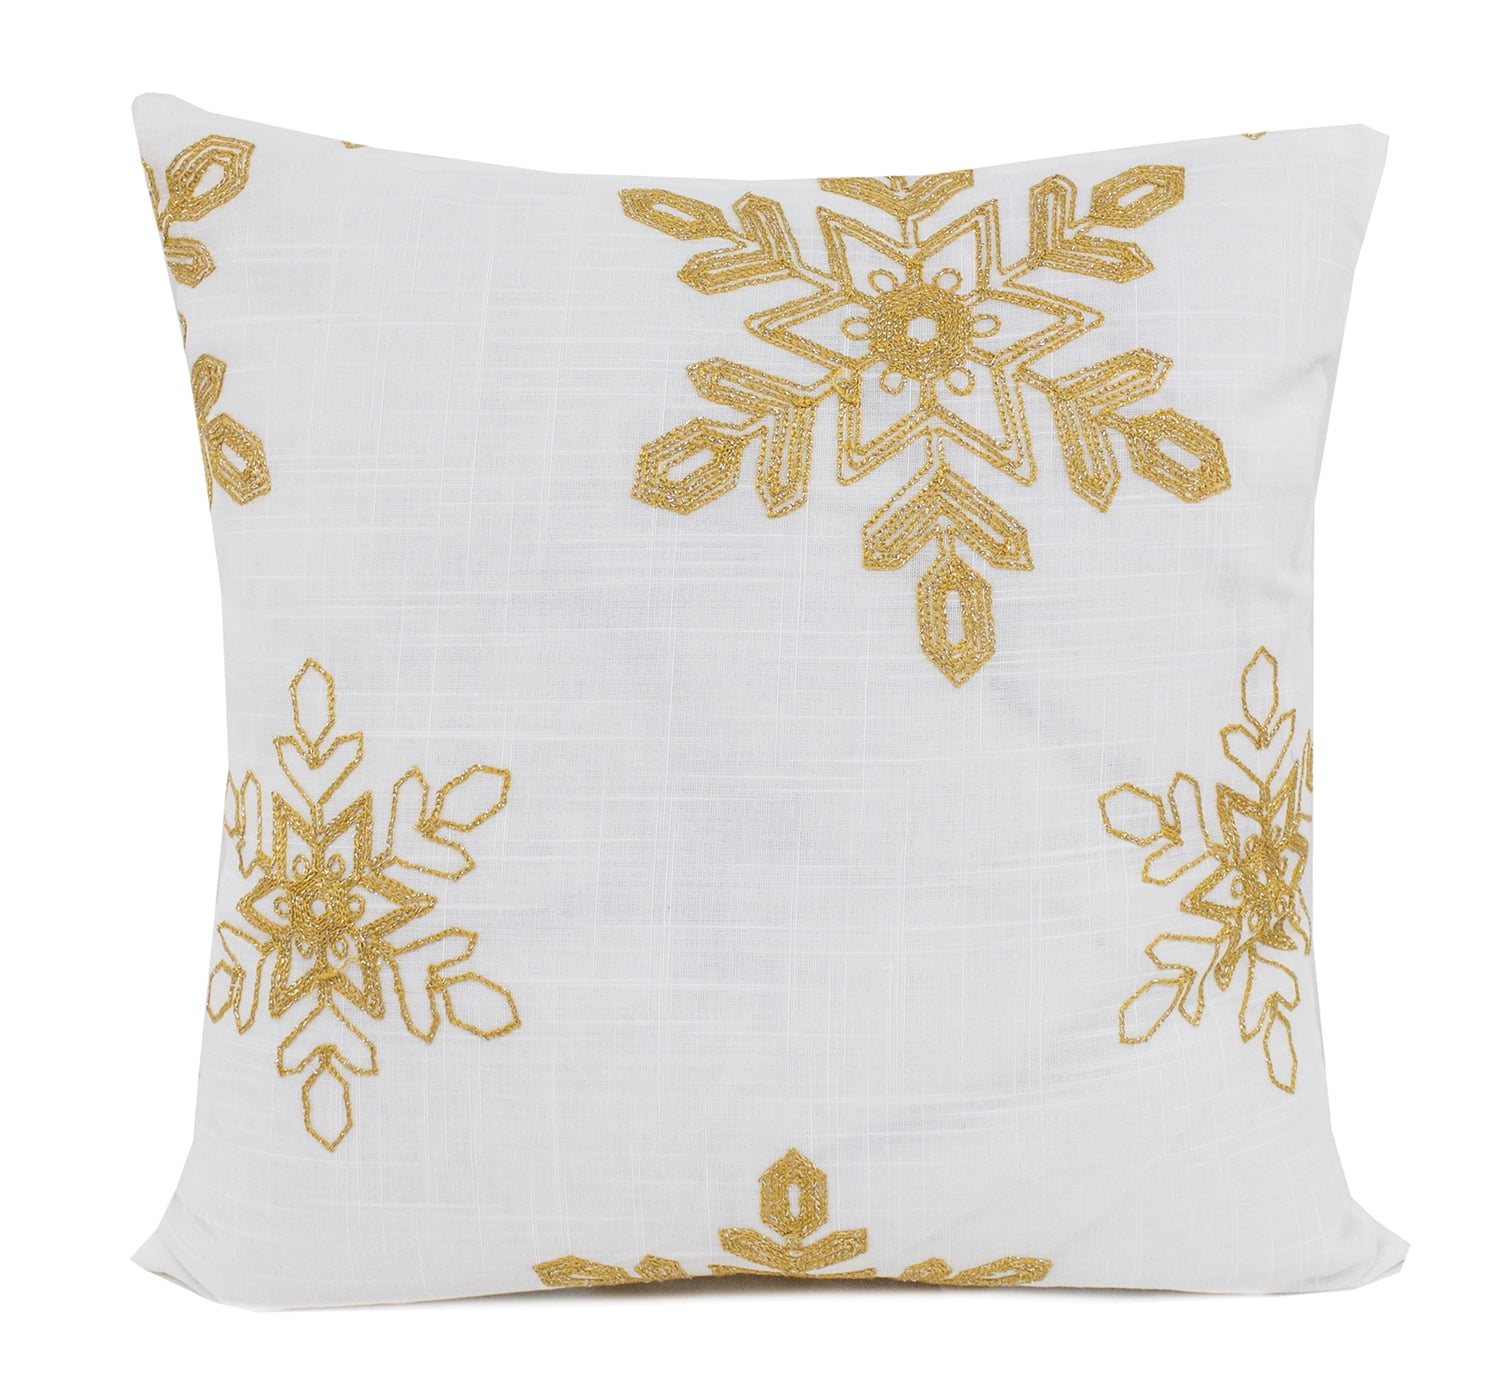 Snowflake Golden Pillow Cover 